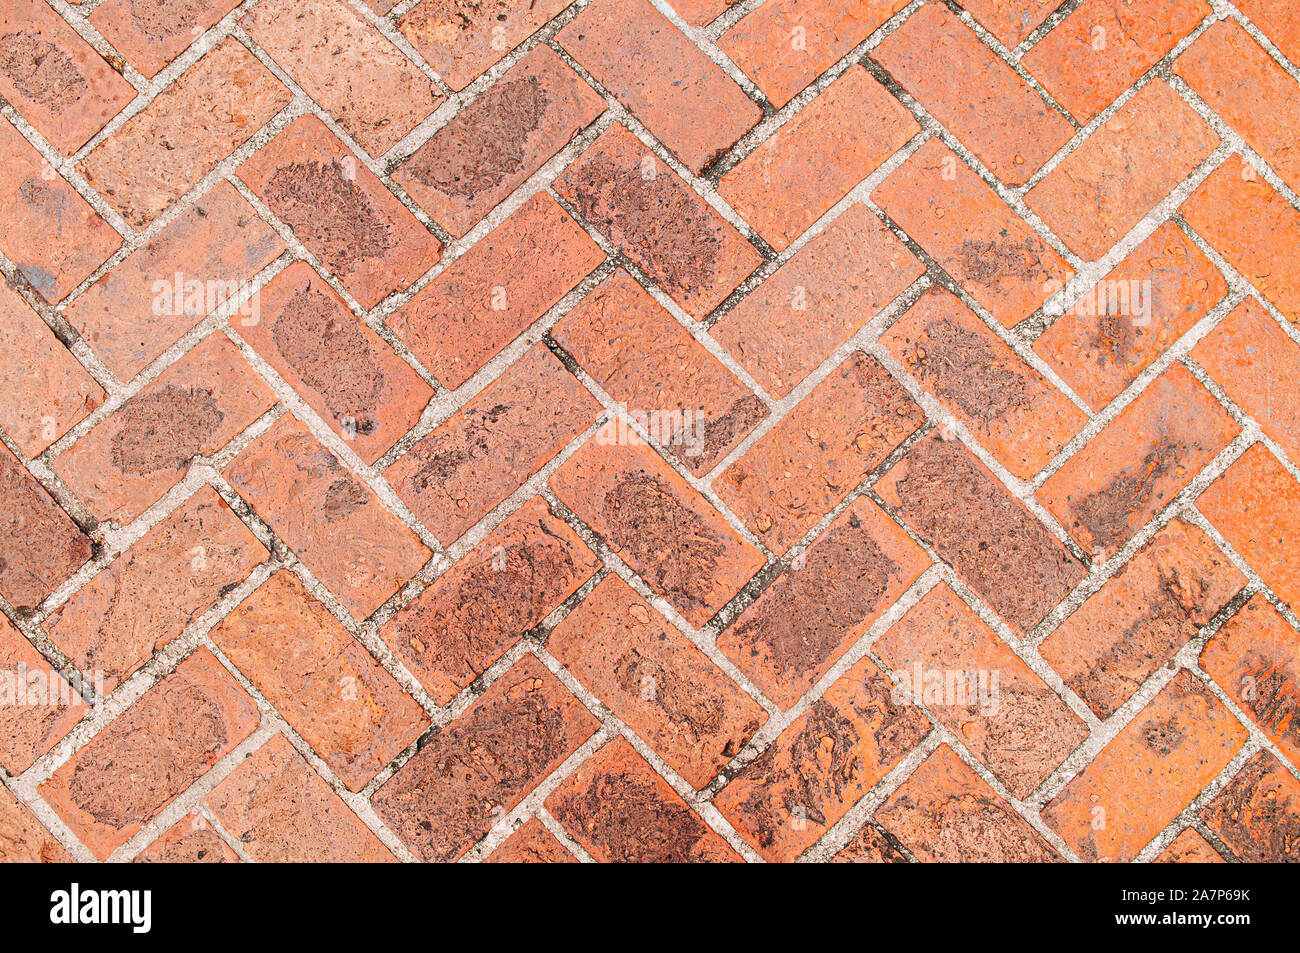 Old red brick texture background, diagonal herringbone ...